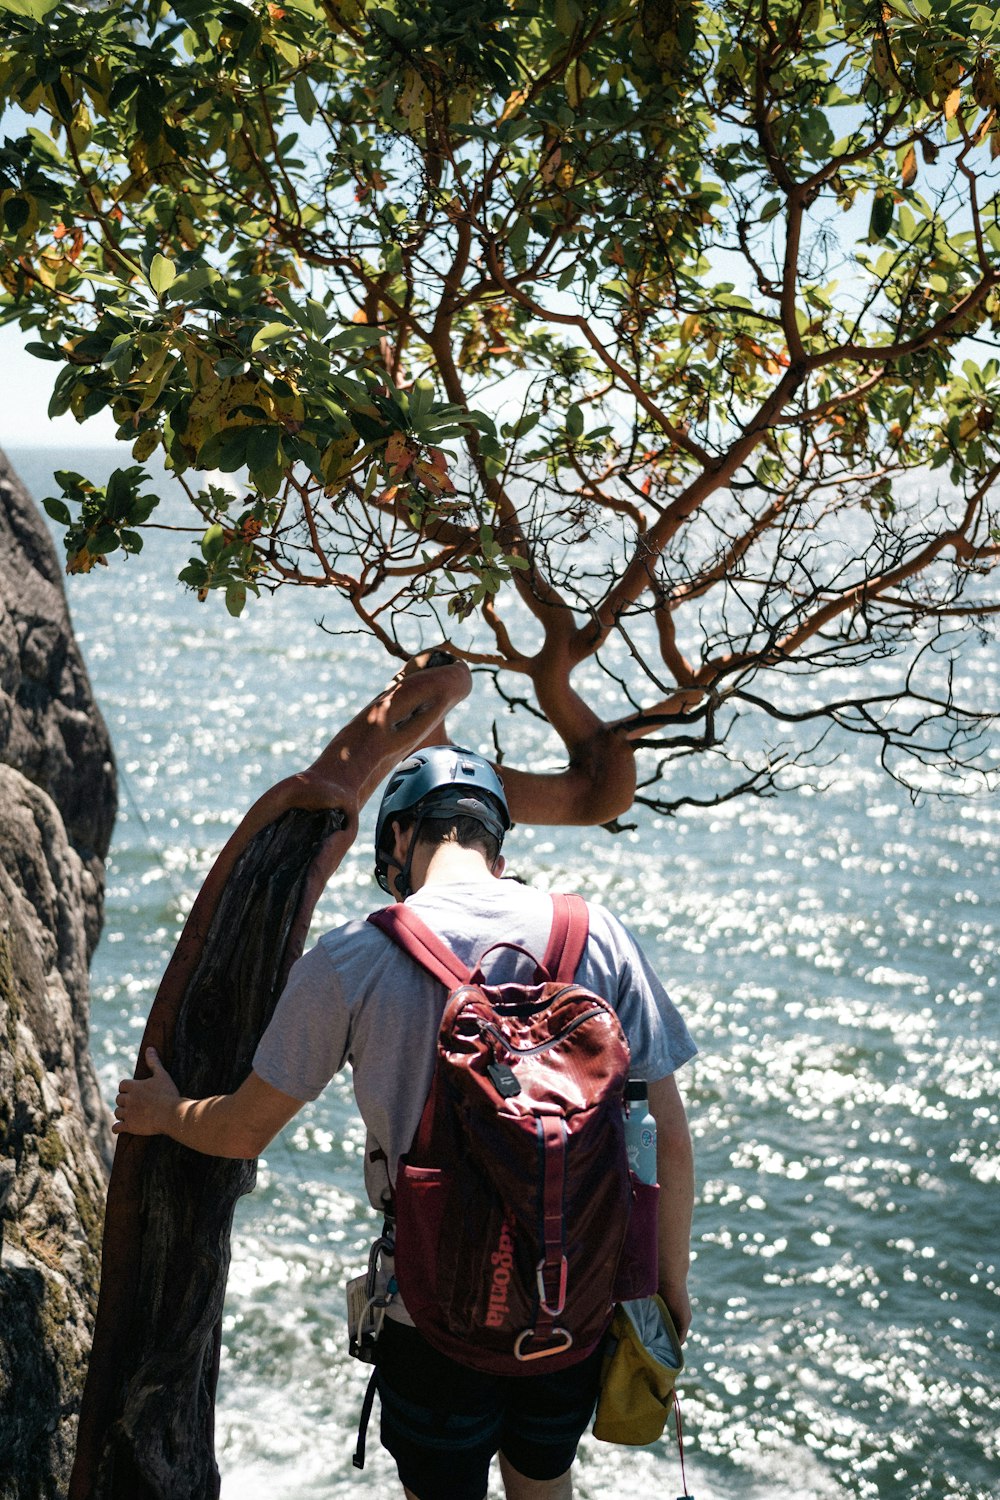 a man climbing up a tree next to the ocean